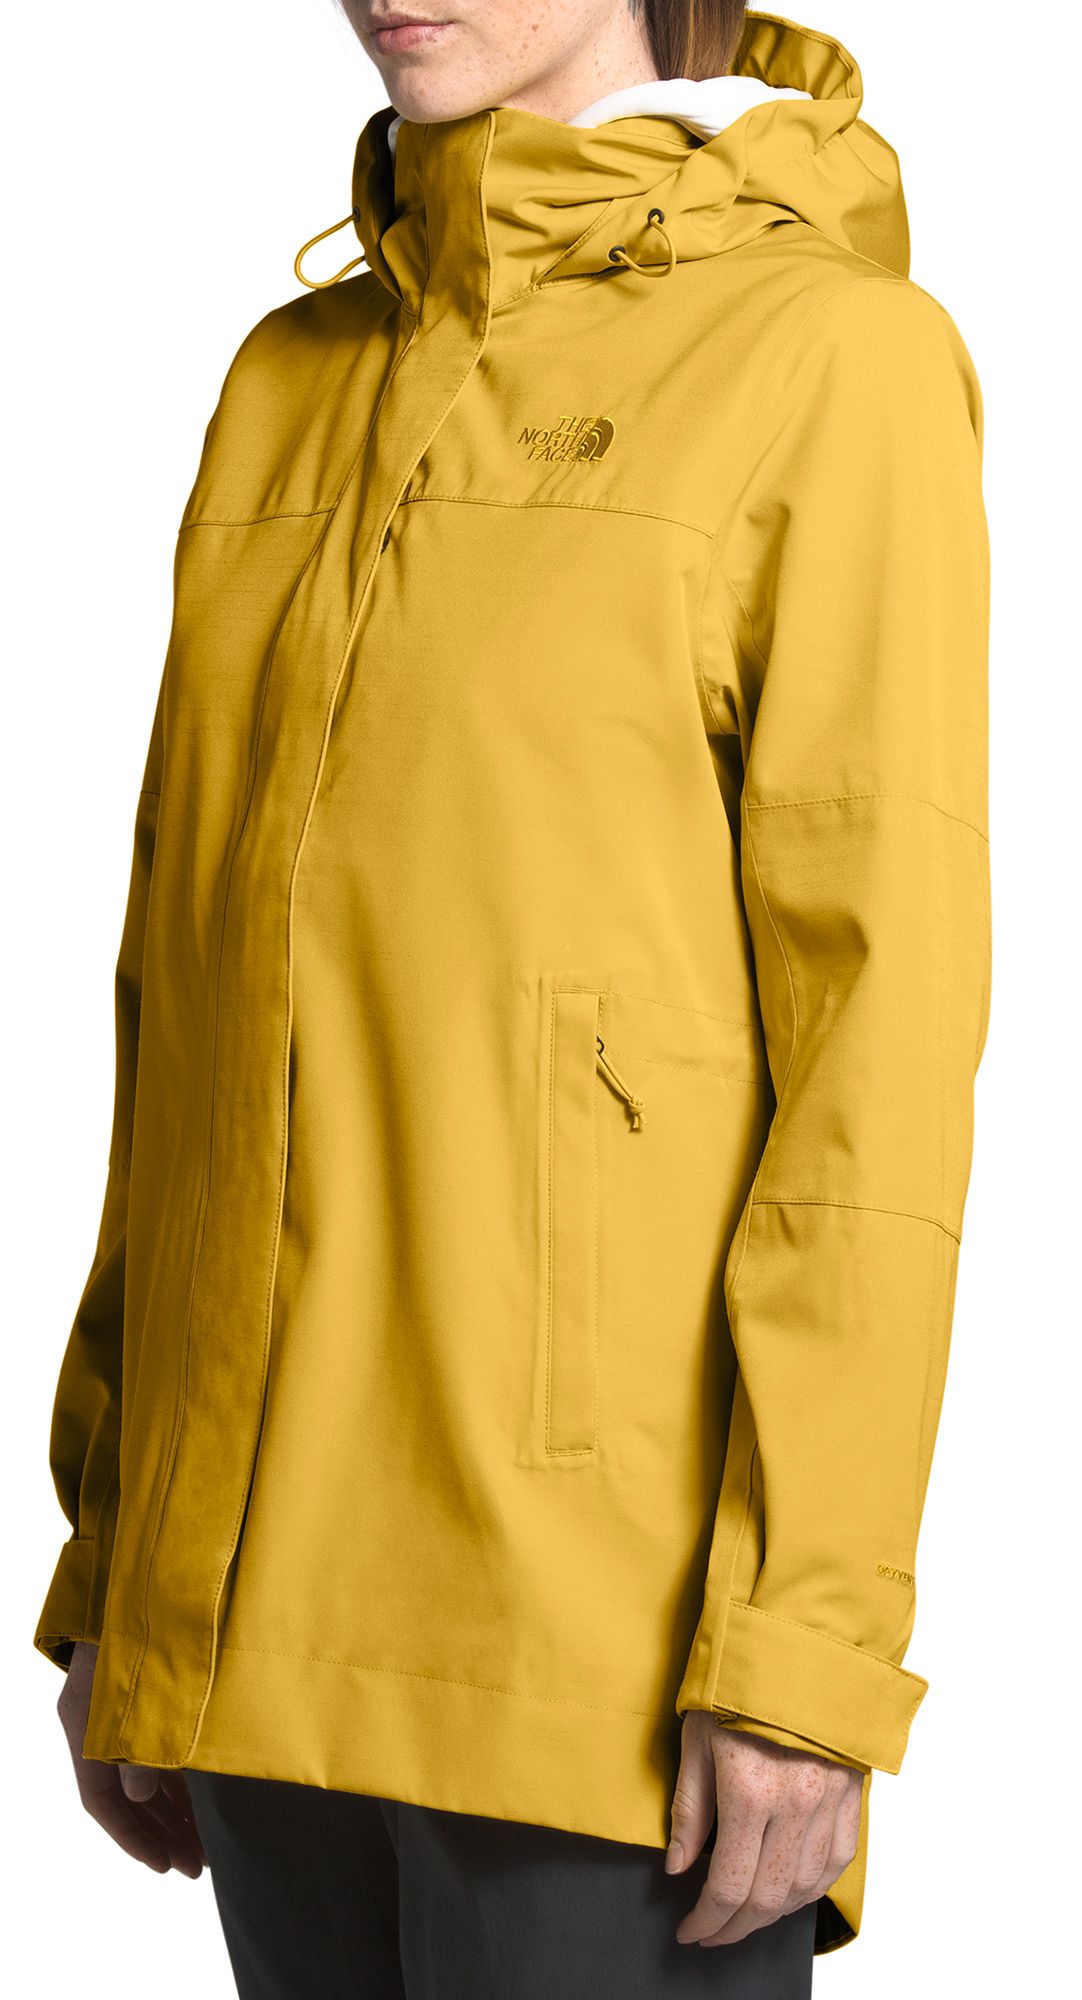 north face women's rain jacket yellow